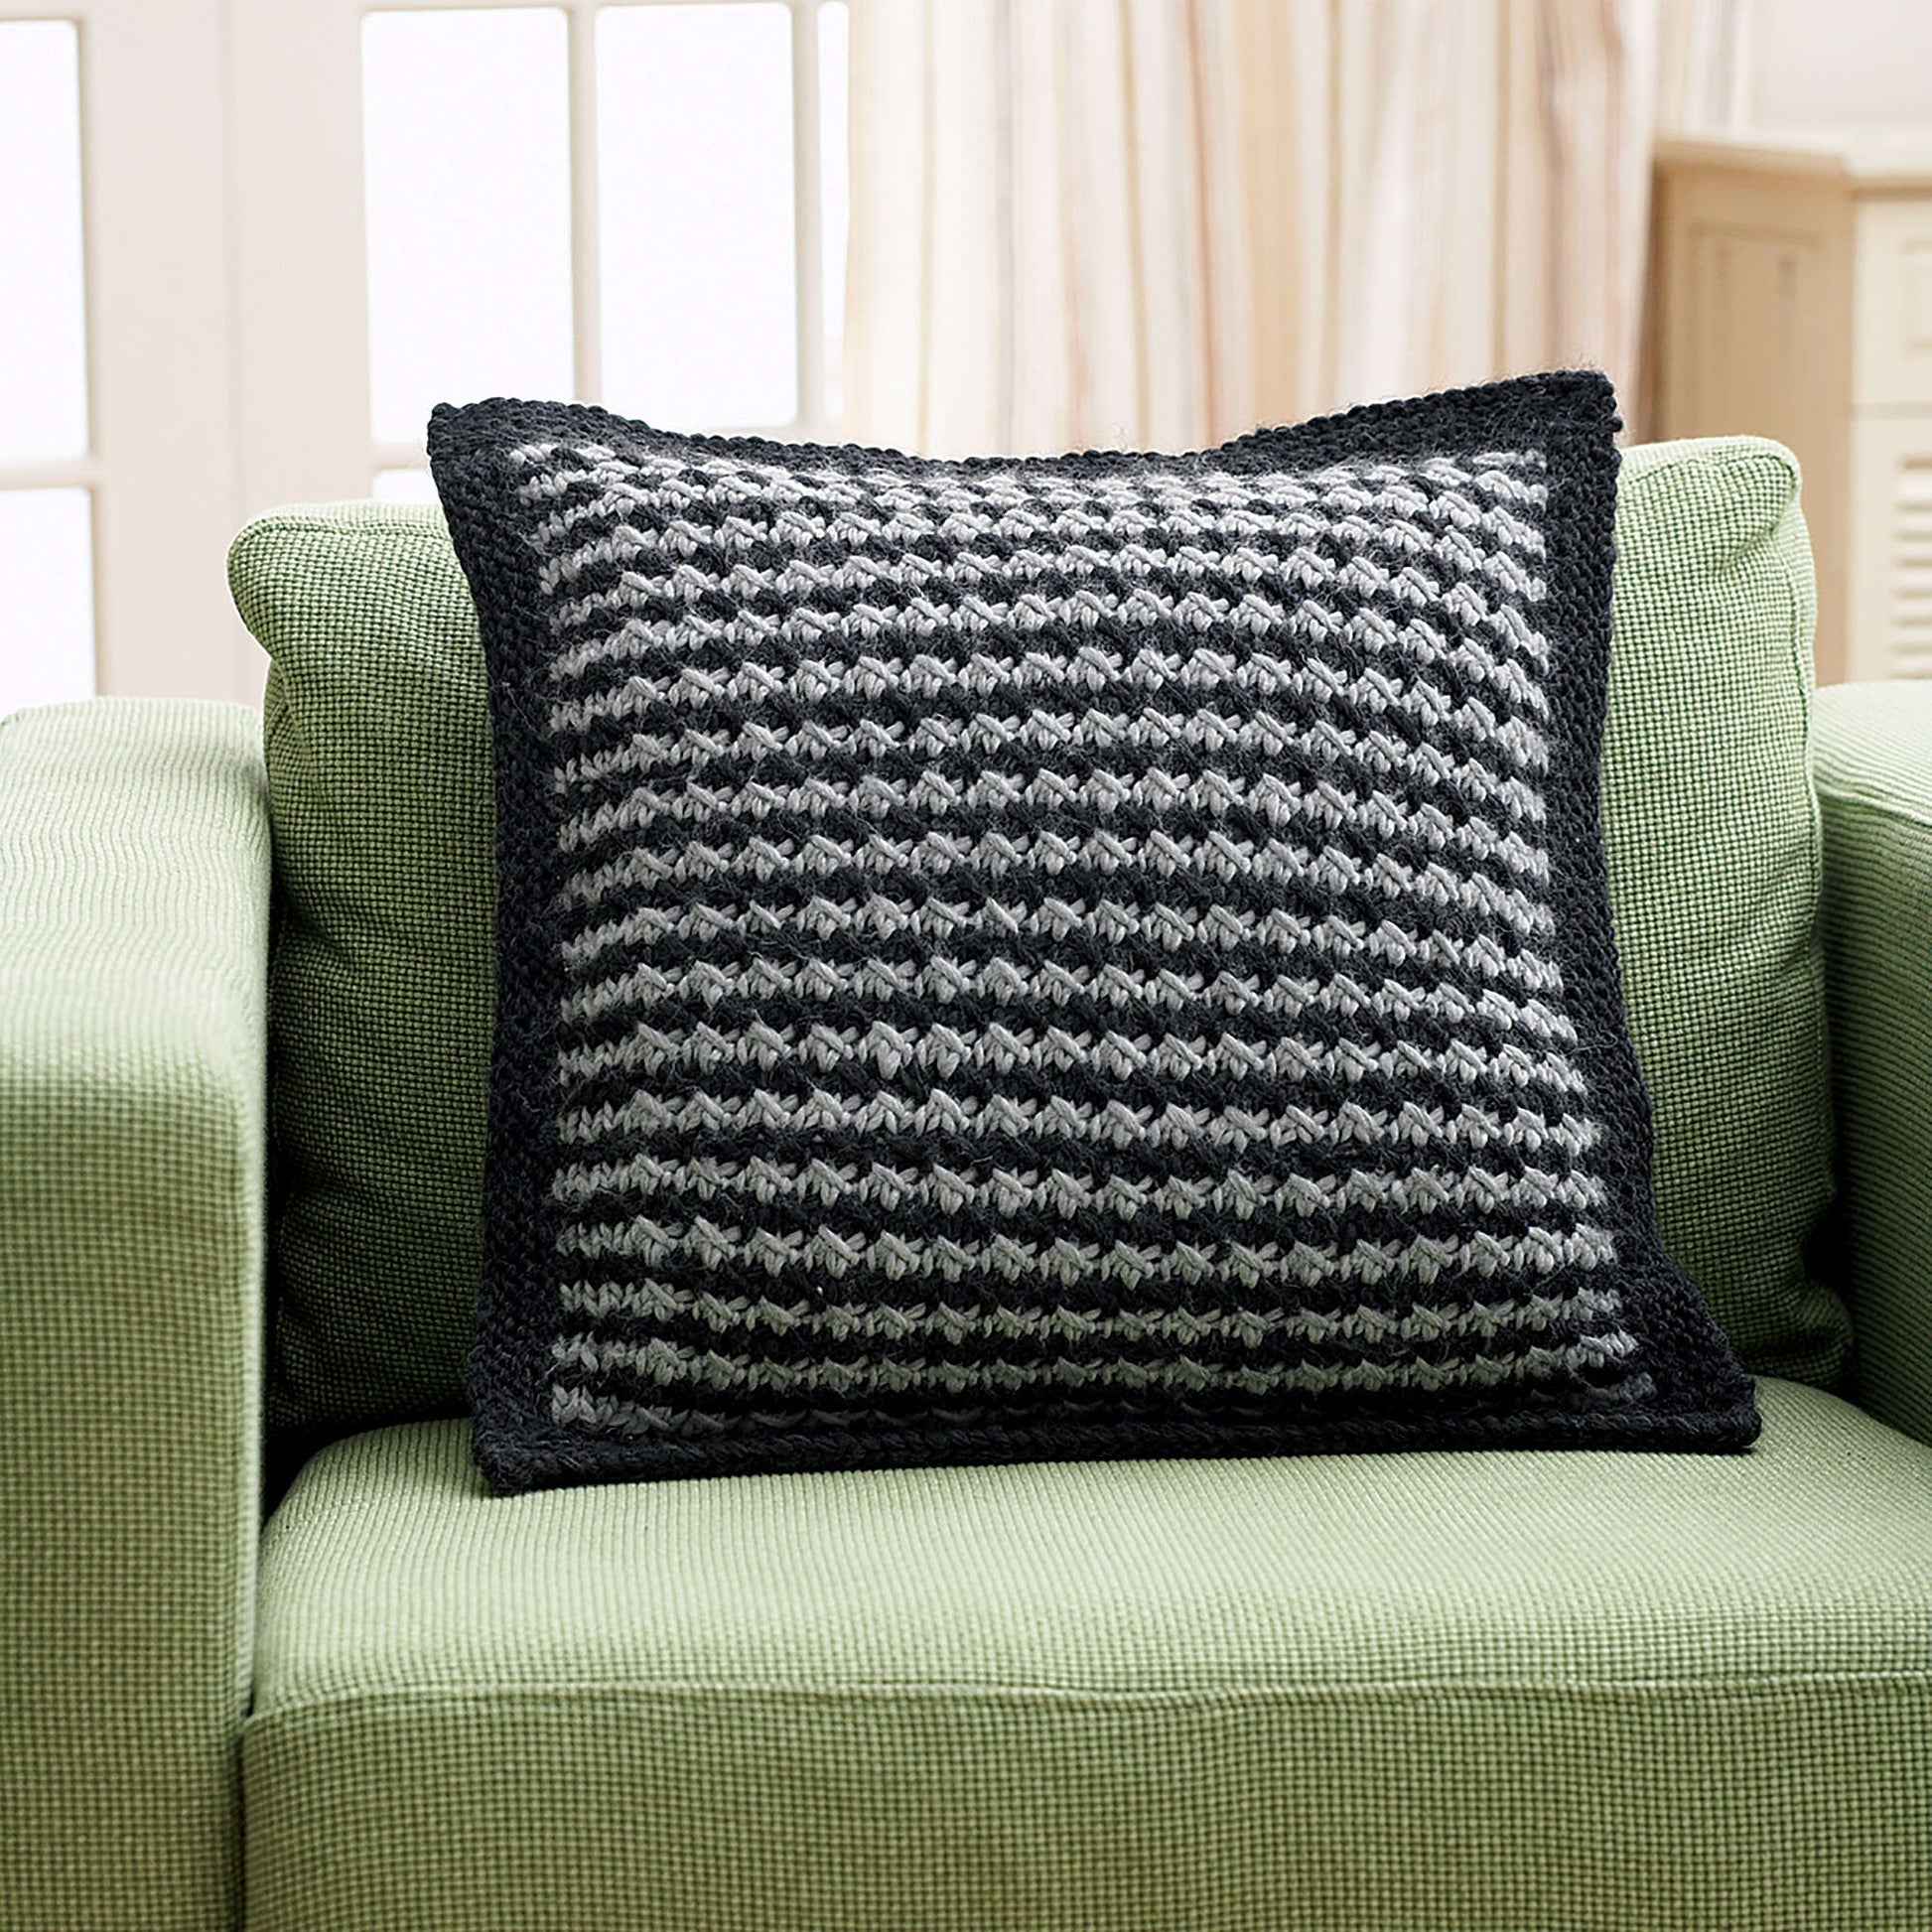 Free Bernat Knit Houndstooth Pillow Pattern